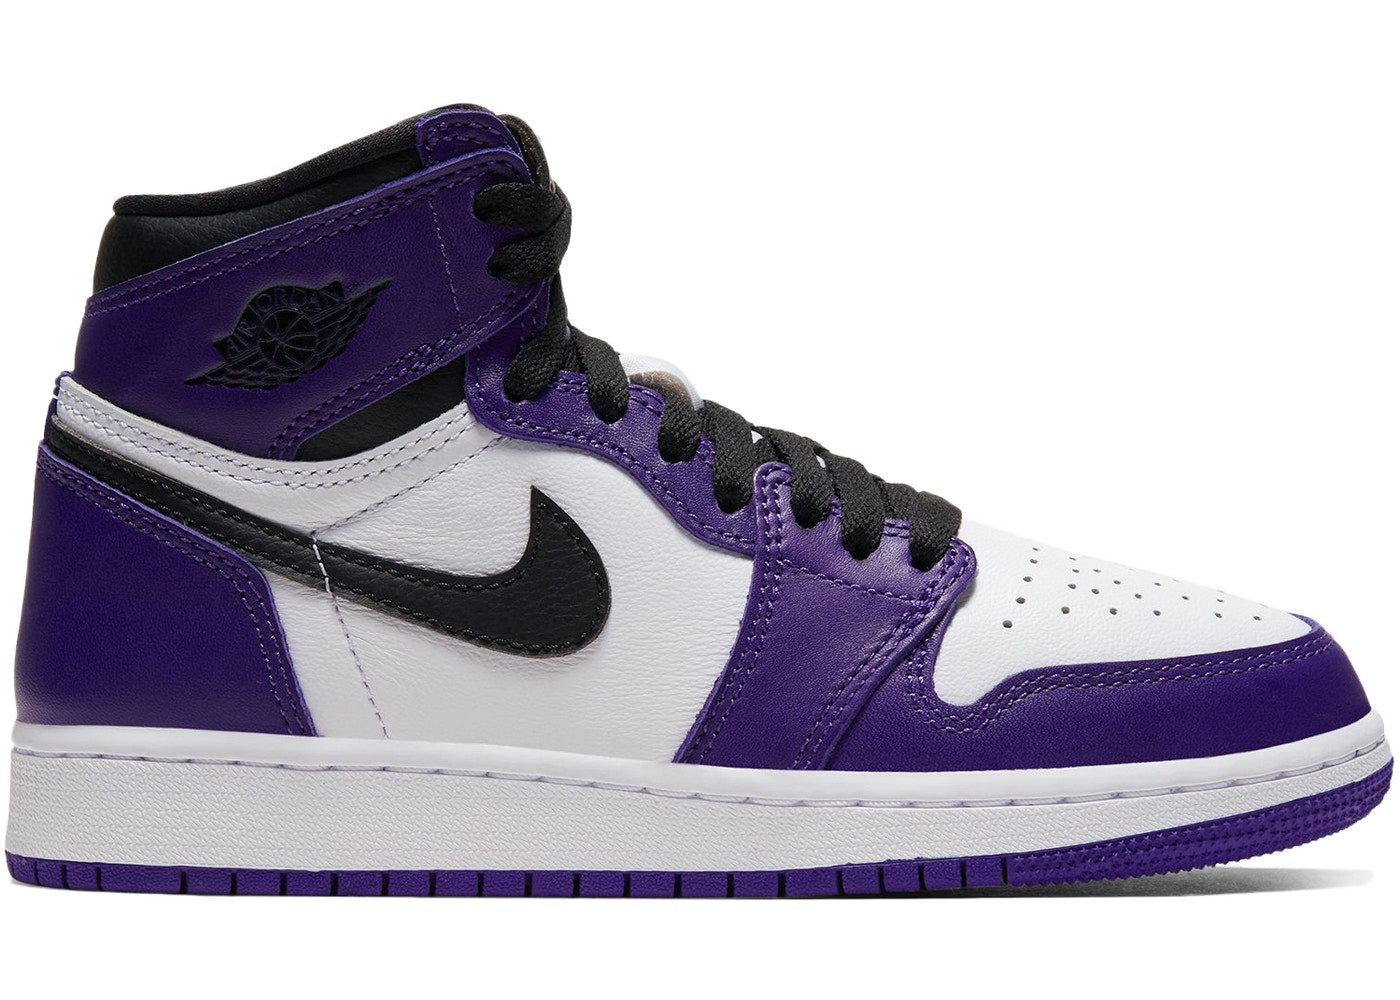 Jordan 1 High "Court Purple" (USED)